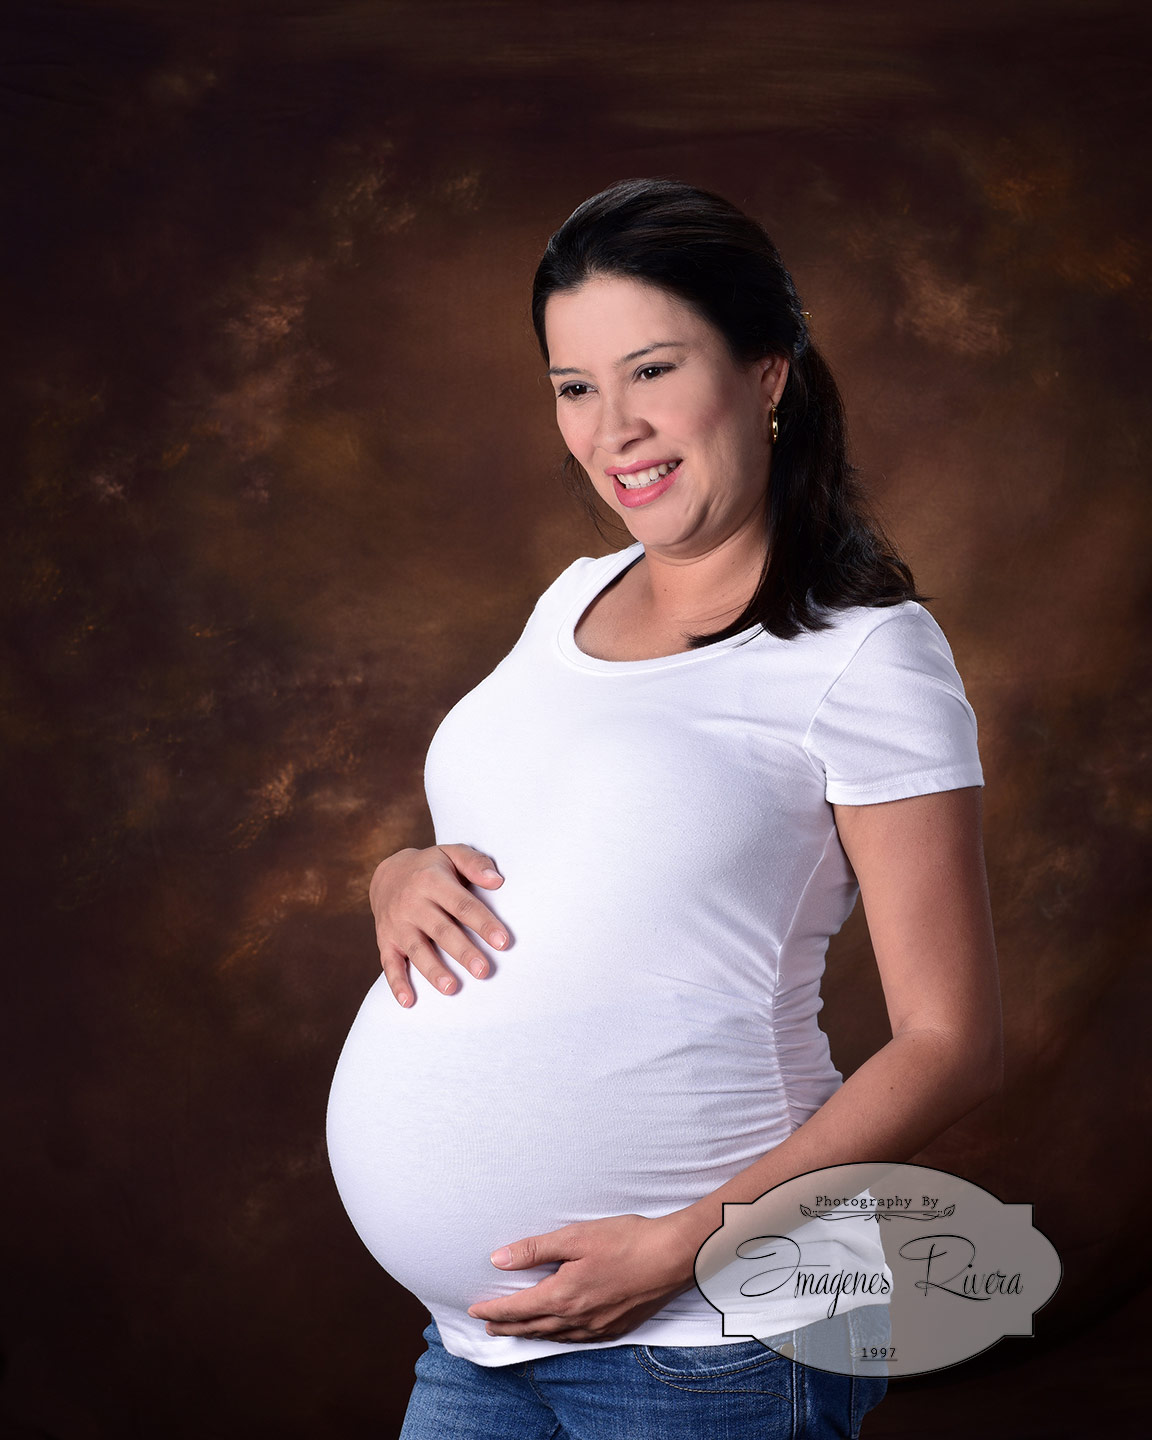 ♥ Pregnancy lifestyle pictures | Imagenes Rivera Miami ♥